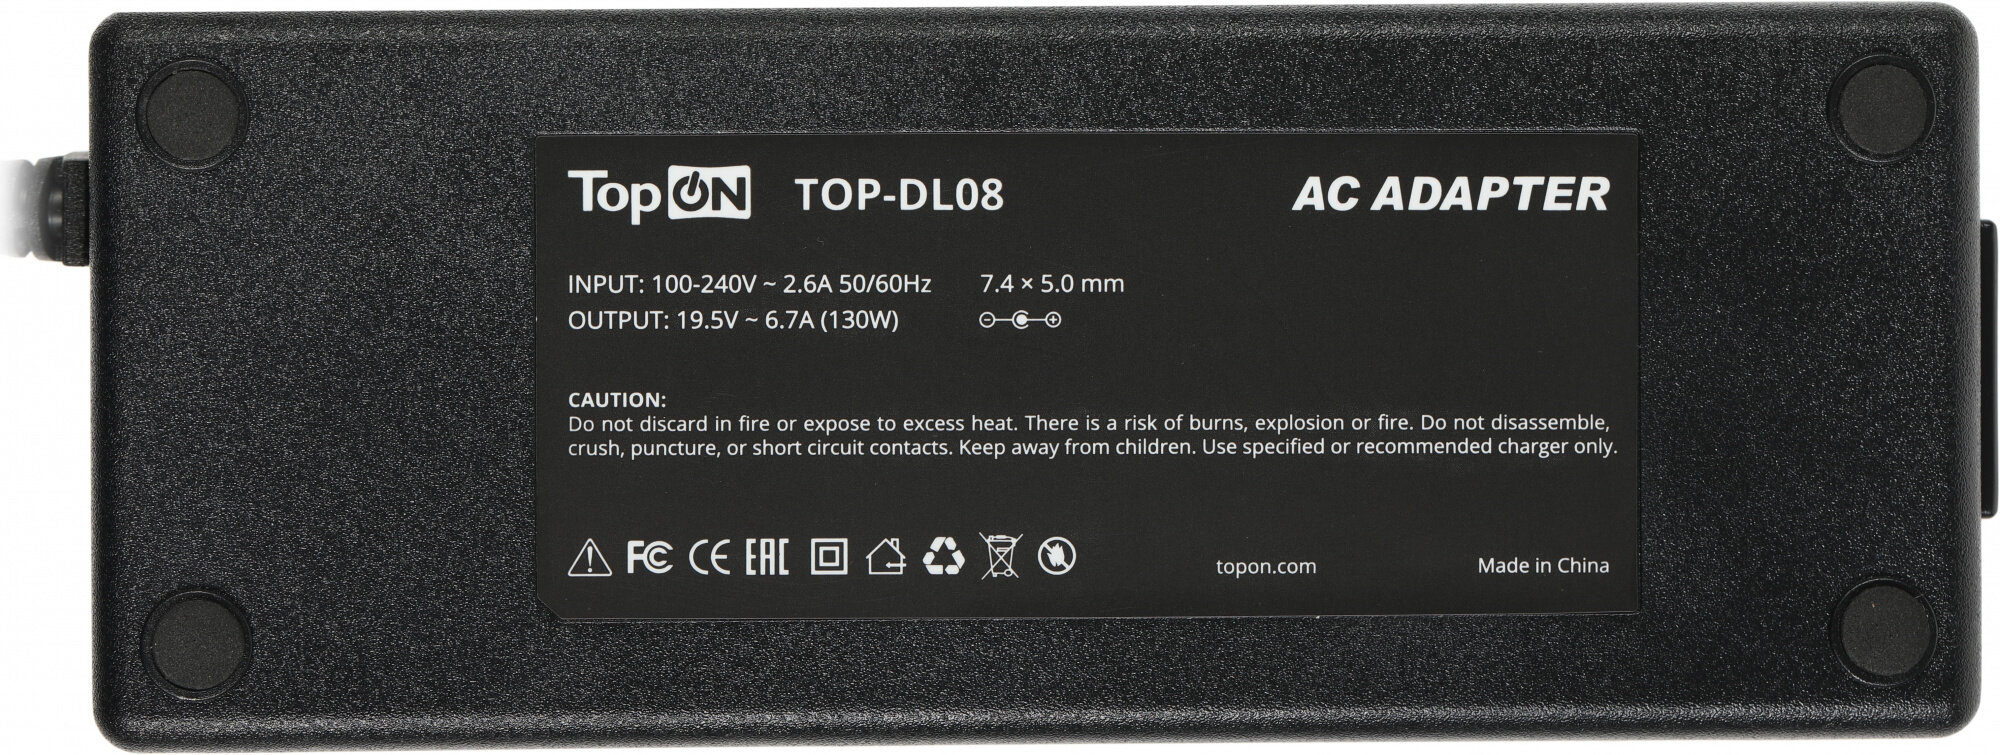 Зарядное устройство TopON TOP-DL08 19.5V -> 6.7A для DELL Latitude, Inspiron, XPS, Precision,Vostro PA-13 (7.4x5.0mm с иглой) 130W - фото №11